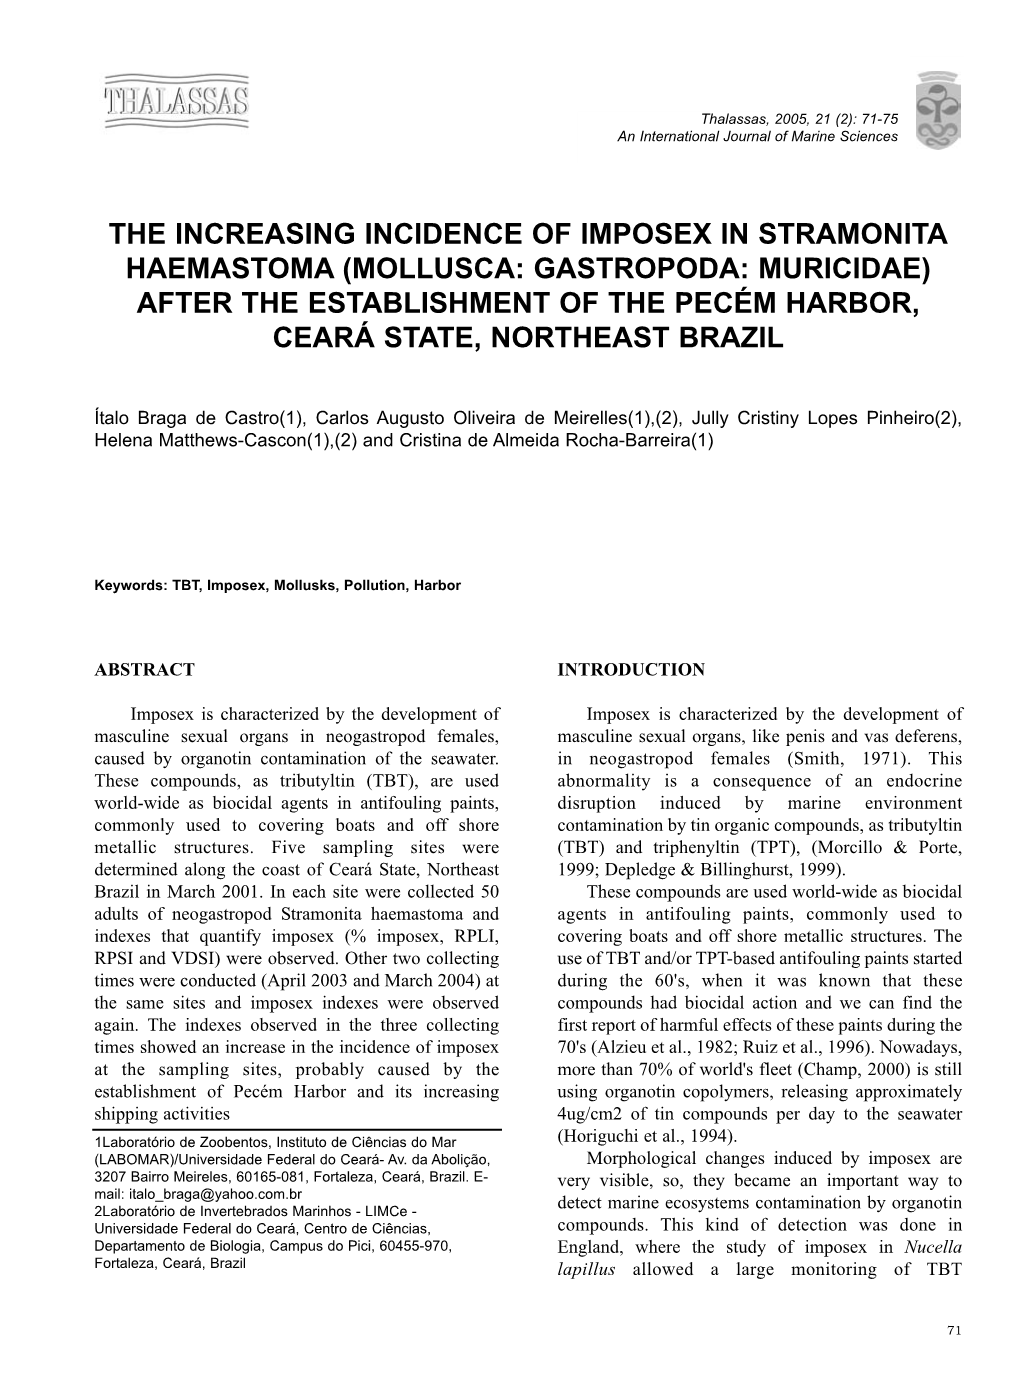 The Increasing Incidence of Imposex in Stramonita